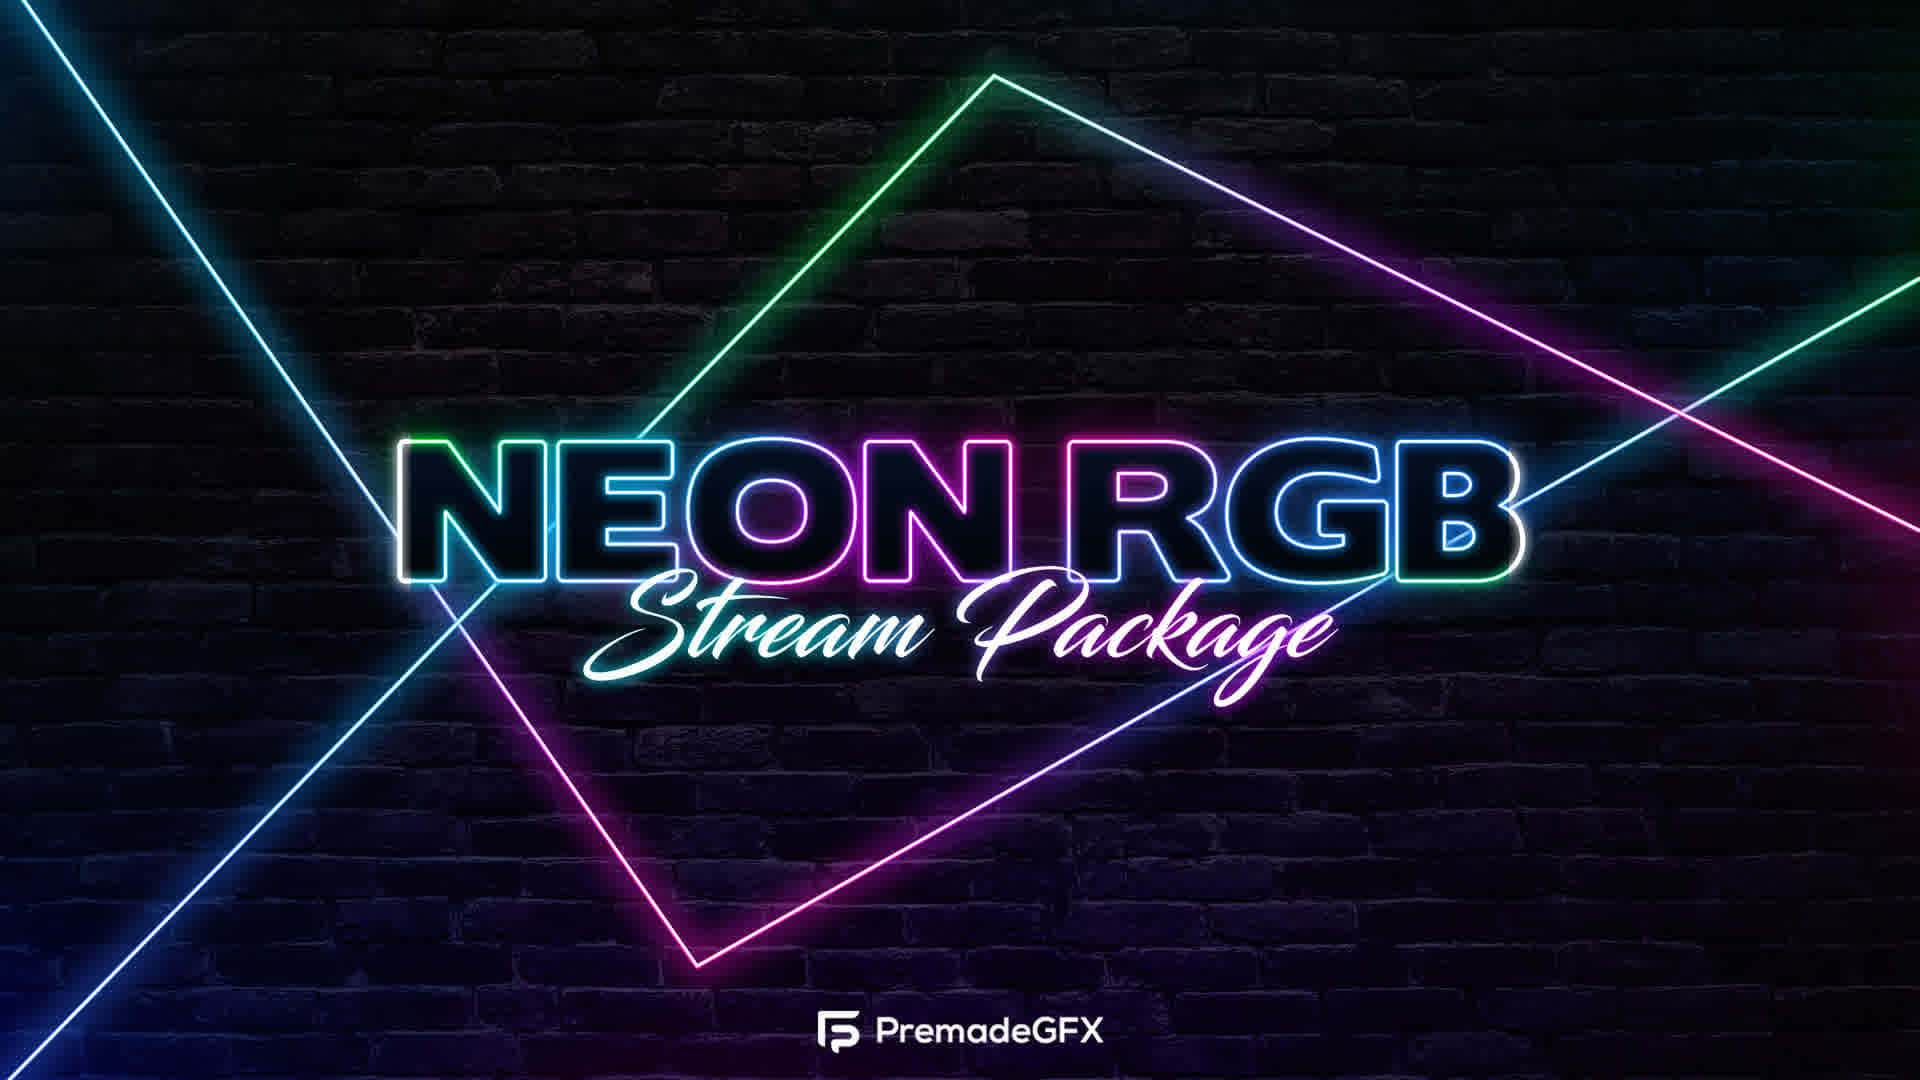 Neonrgb Stream-paket Wallpaper